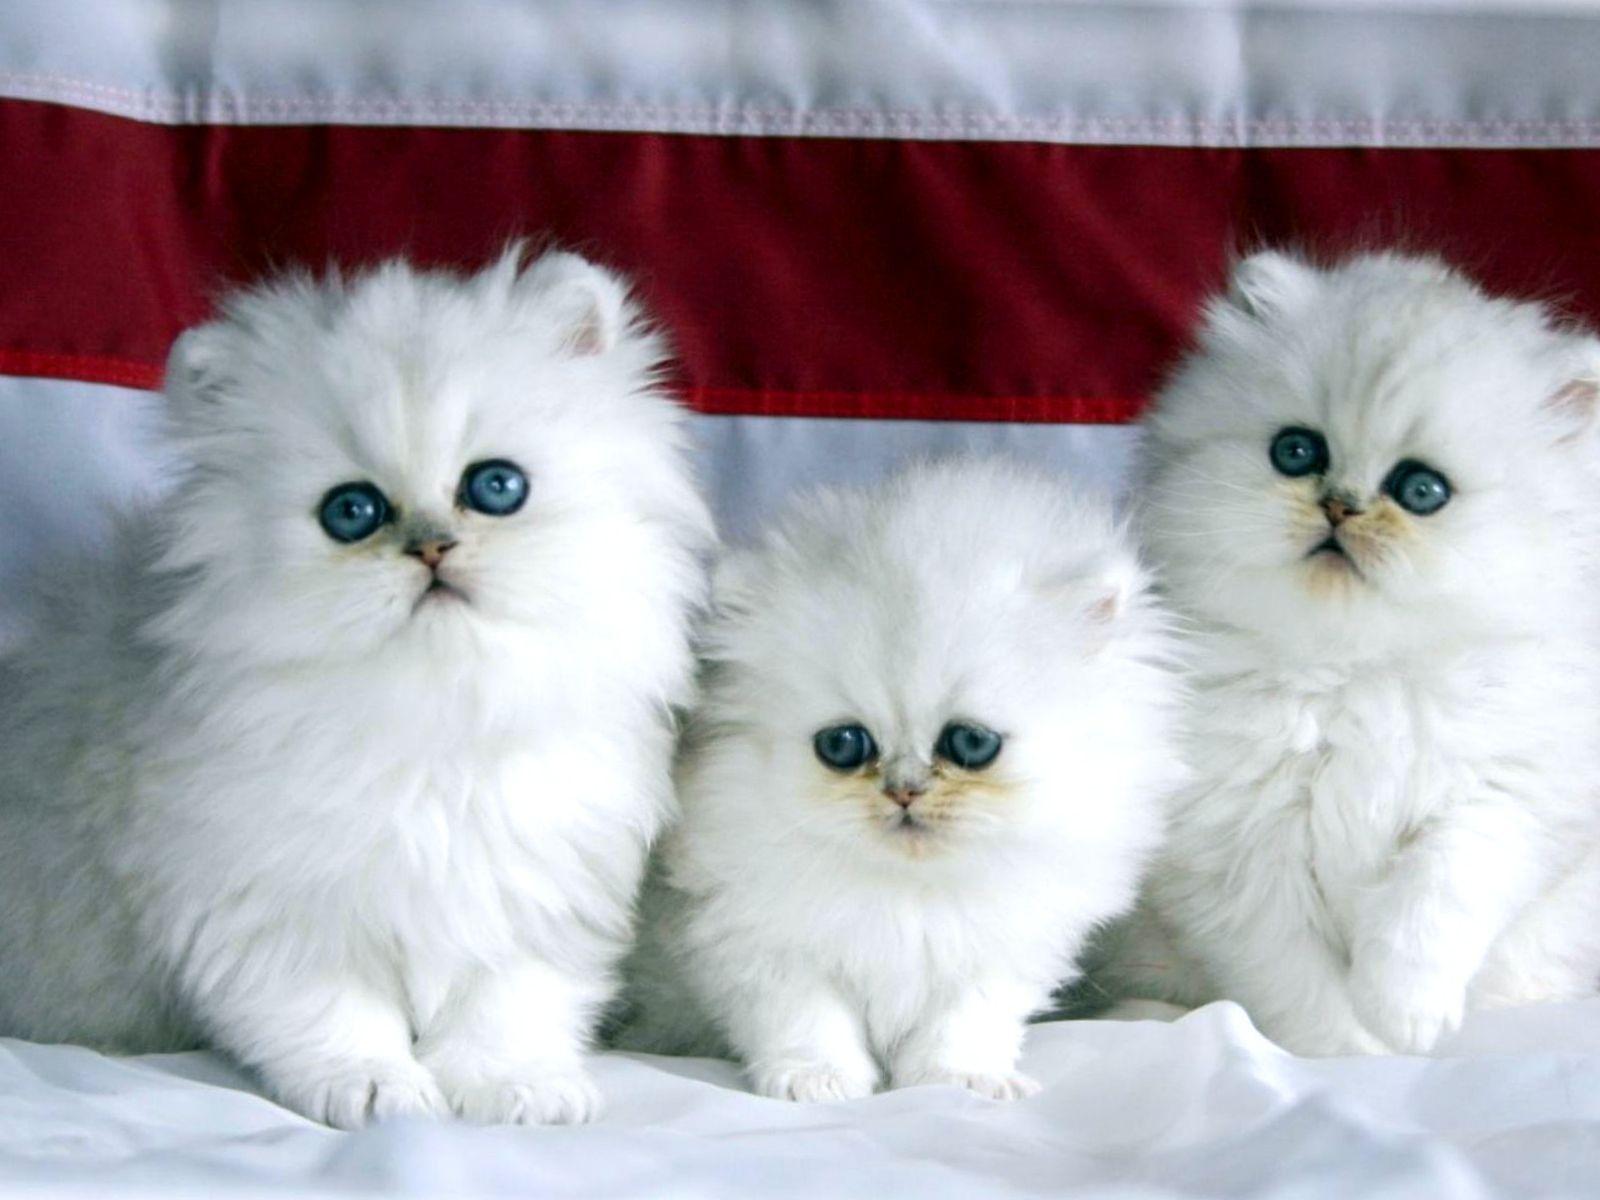 Persian cat Wallpaper HD Download. Cute cat wallpaper, Cute cats and dogs, Cute cats and kittens